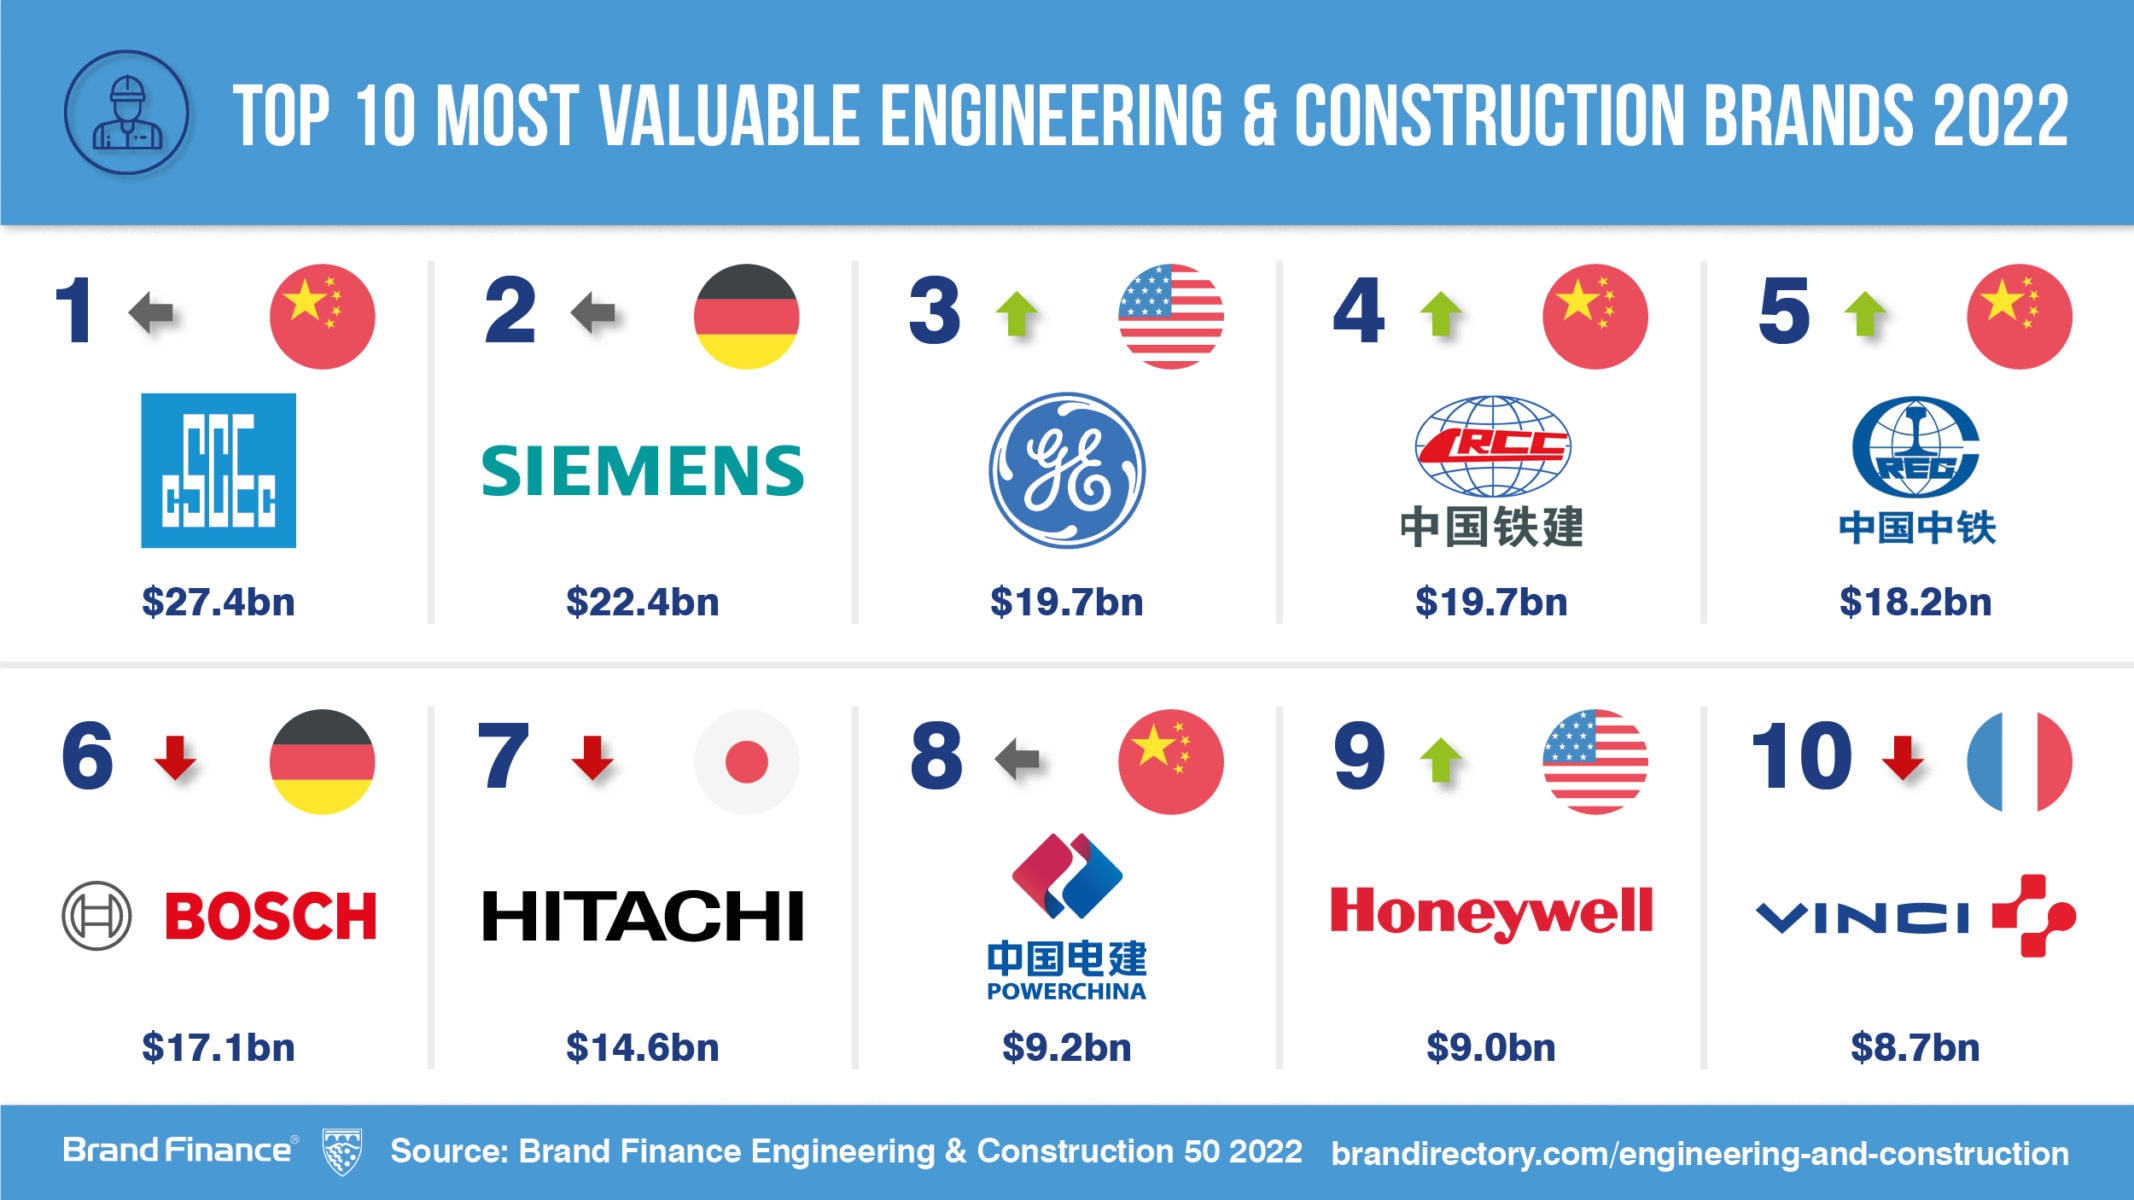 Top 10 Construction Companies